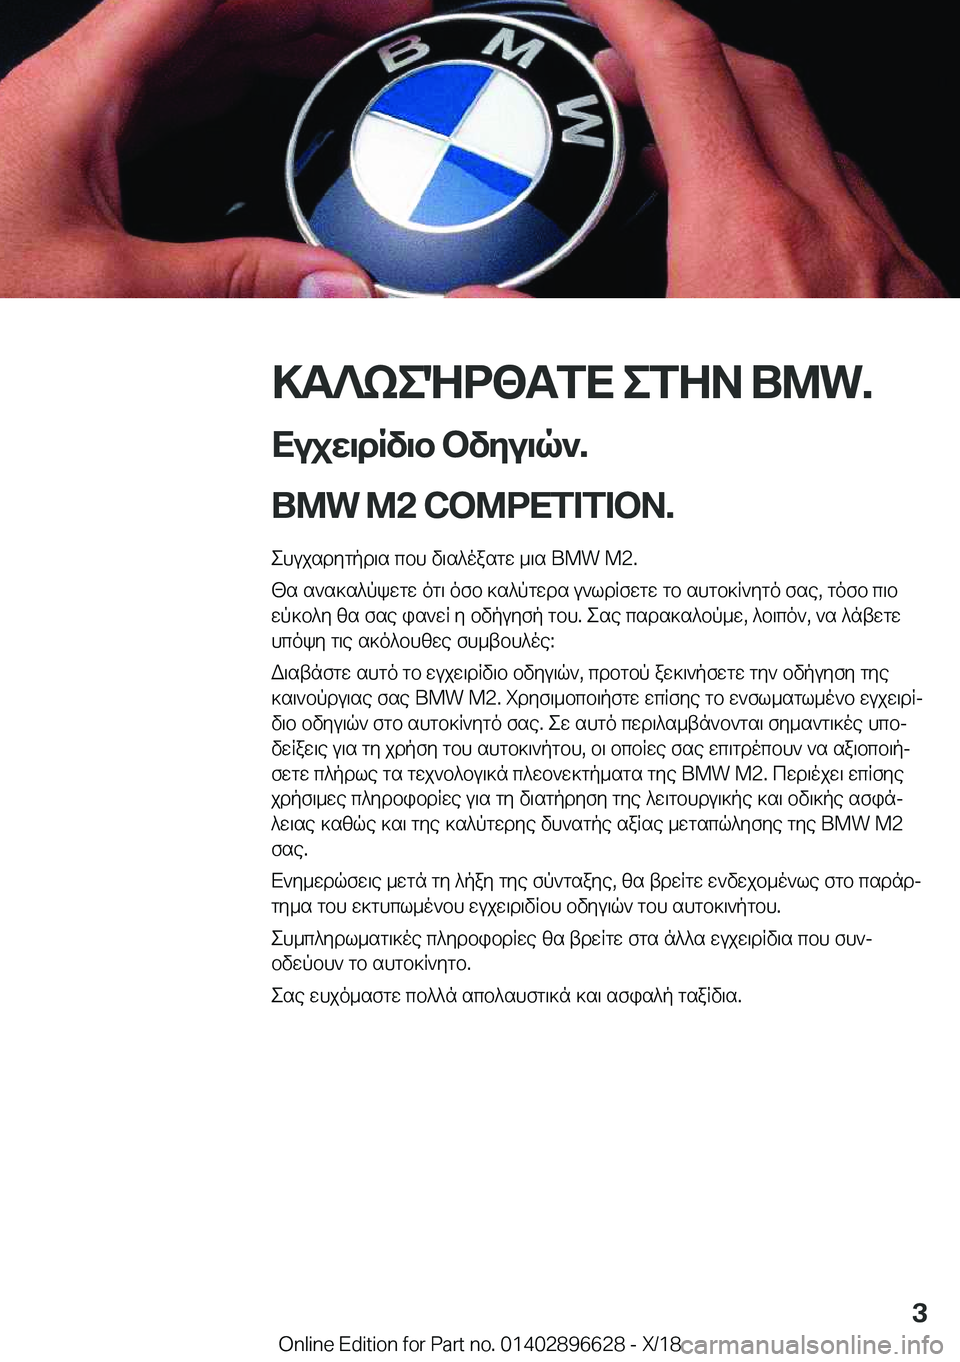 BMW M2 2019  ΟΔΗΓΌΣ ΧΡΉΣΗΣ (in Greek) >T?keNd<TfX�efZA��B�M�W�.
XujX\dRv\b�bvZu\q`�.
�B�M�W��M�2��C�O�M�P�E�T�I�T�I�O�N�.� ehujsdygpd\s�cbh�v\s^oasgw�_\s��B�M�W��M�2�.
